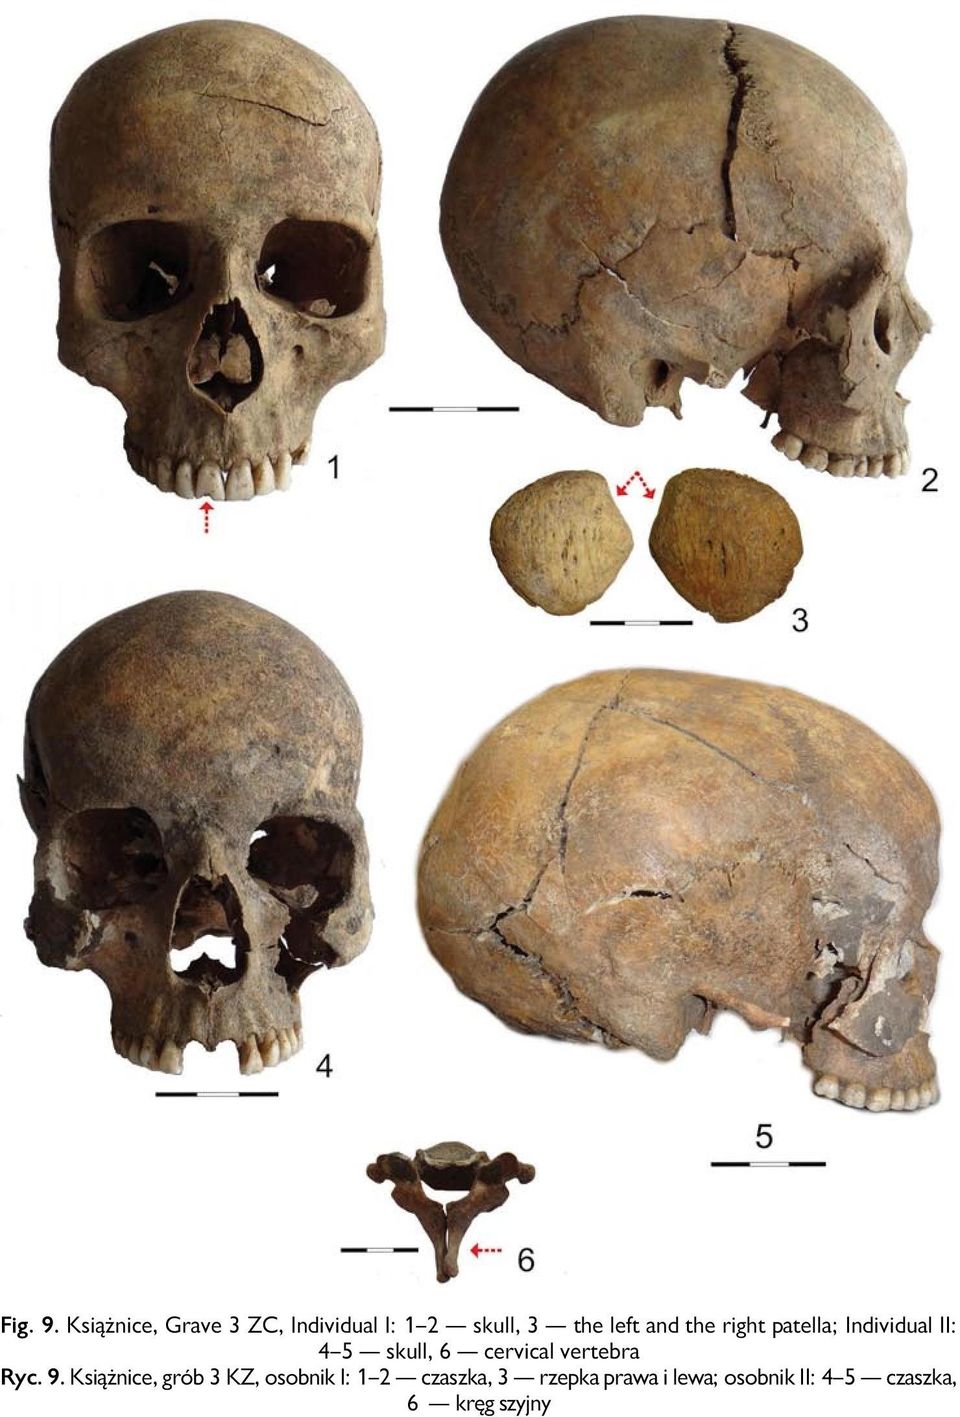 the right patella; Individual II: 4 5 skull, 6 cervical